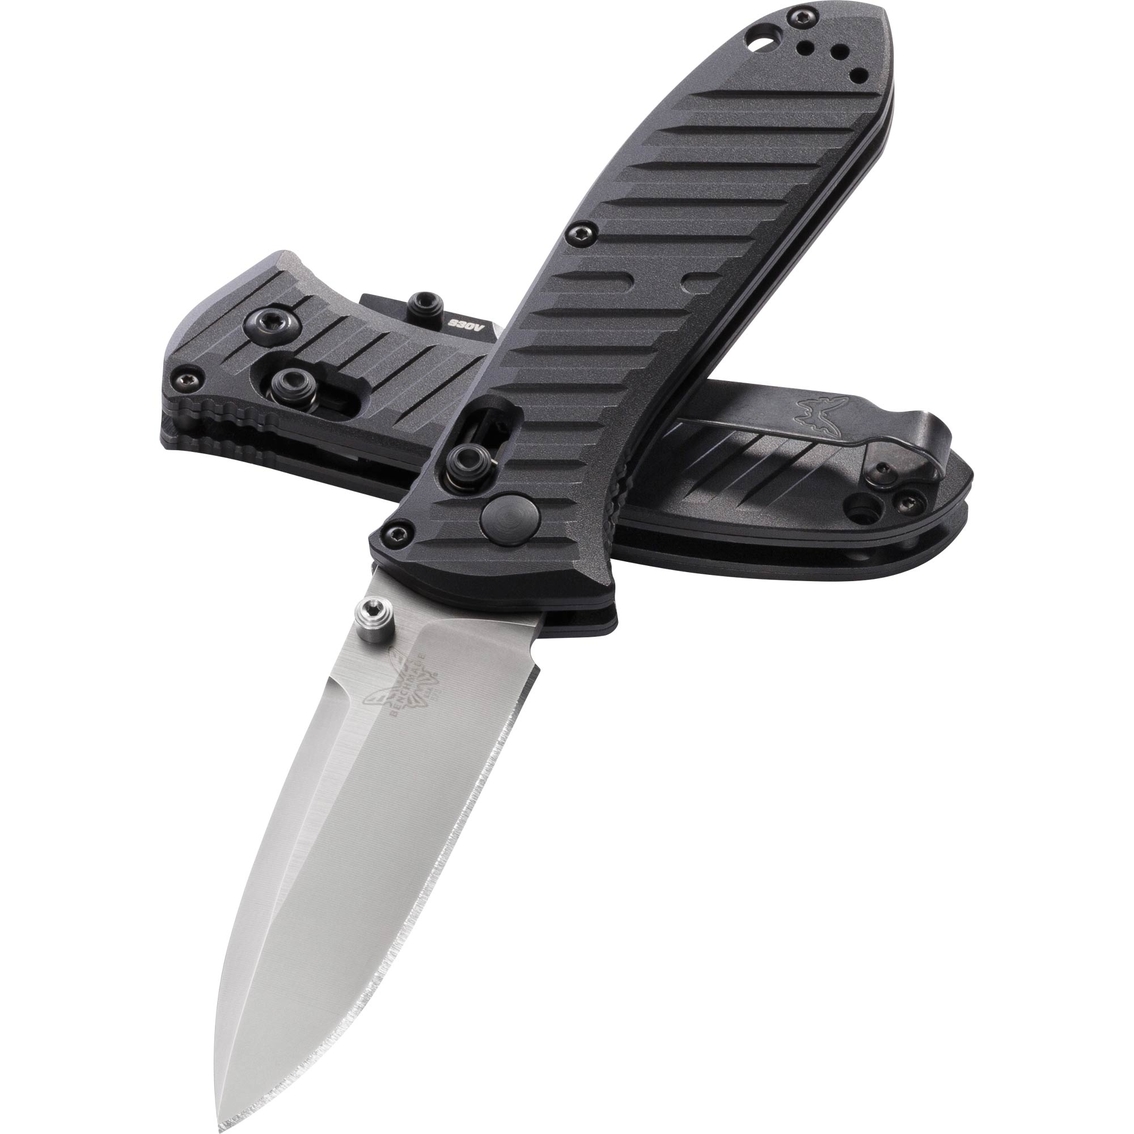 Benchmade 575 Mini Presidio Knife - Image 2 of 2